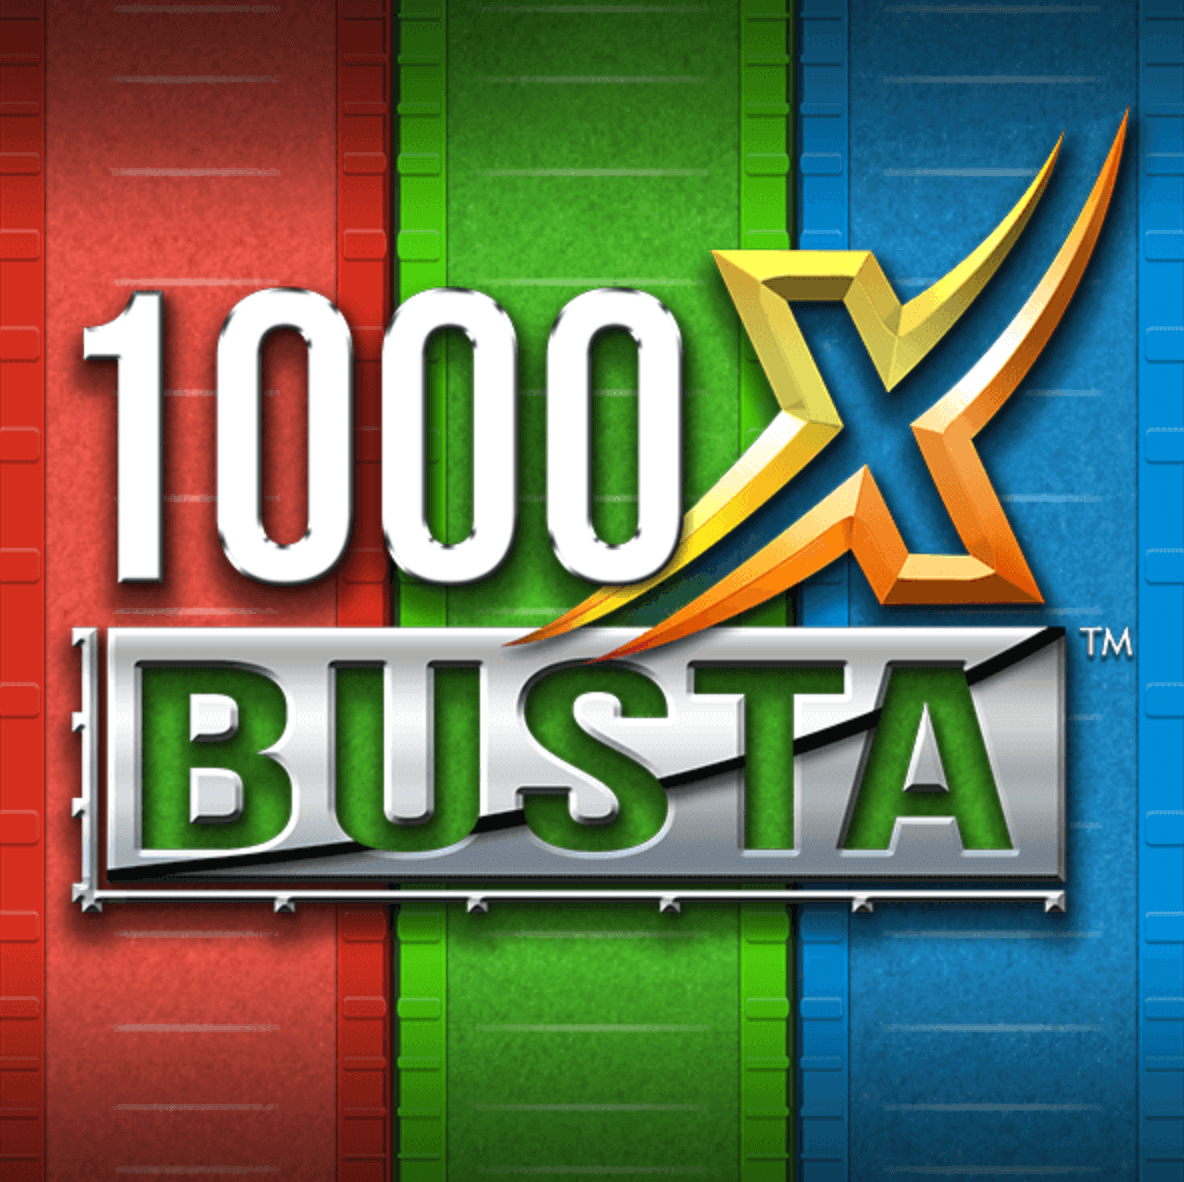 juego crash 1000x Busta